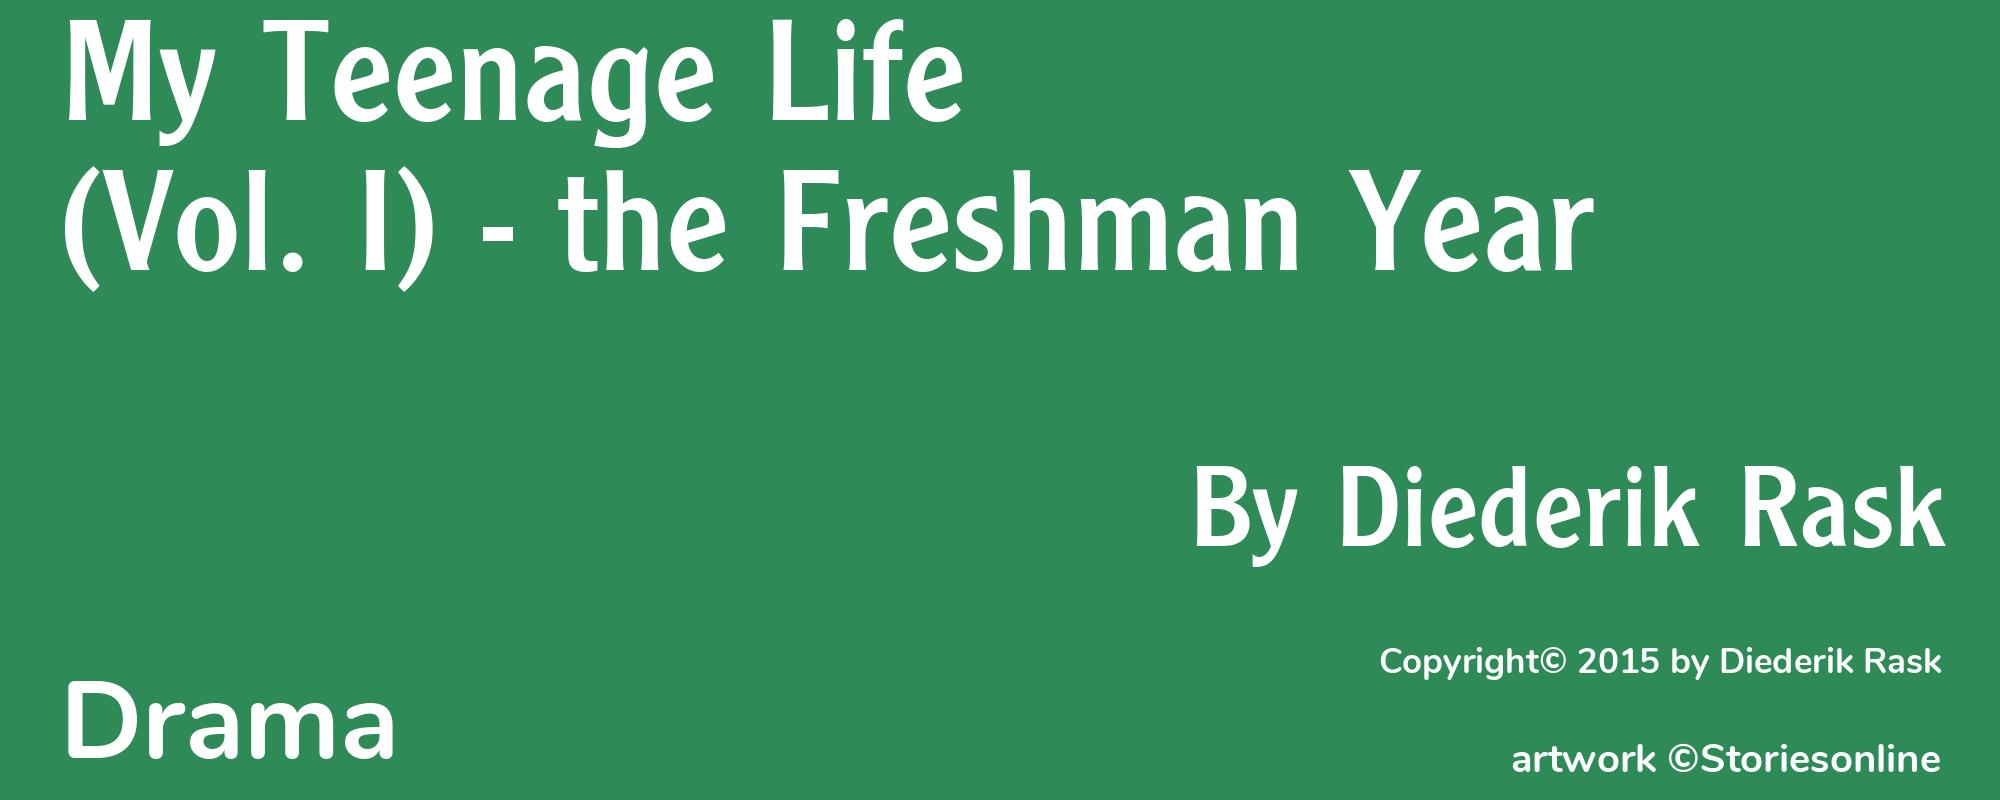 My Teenage Life (Vol. I) - the Freshman Year - Cover